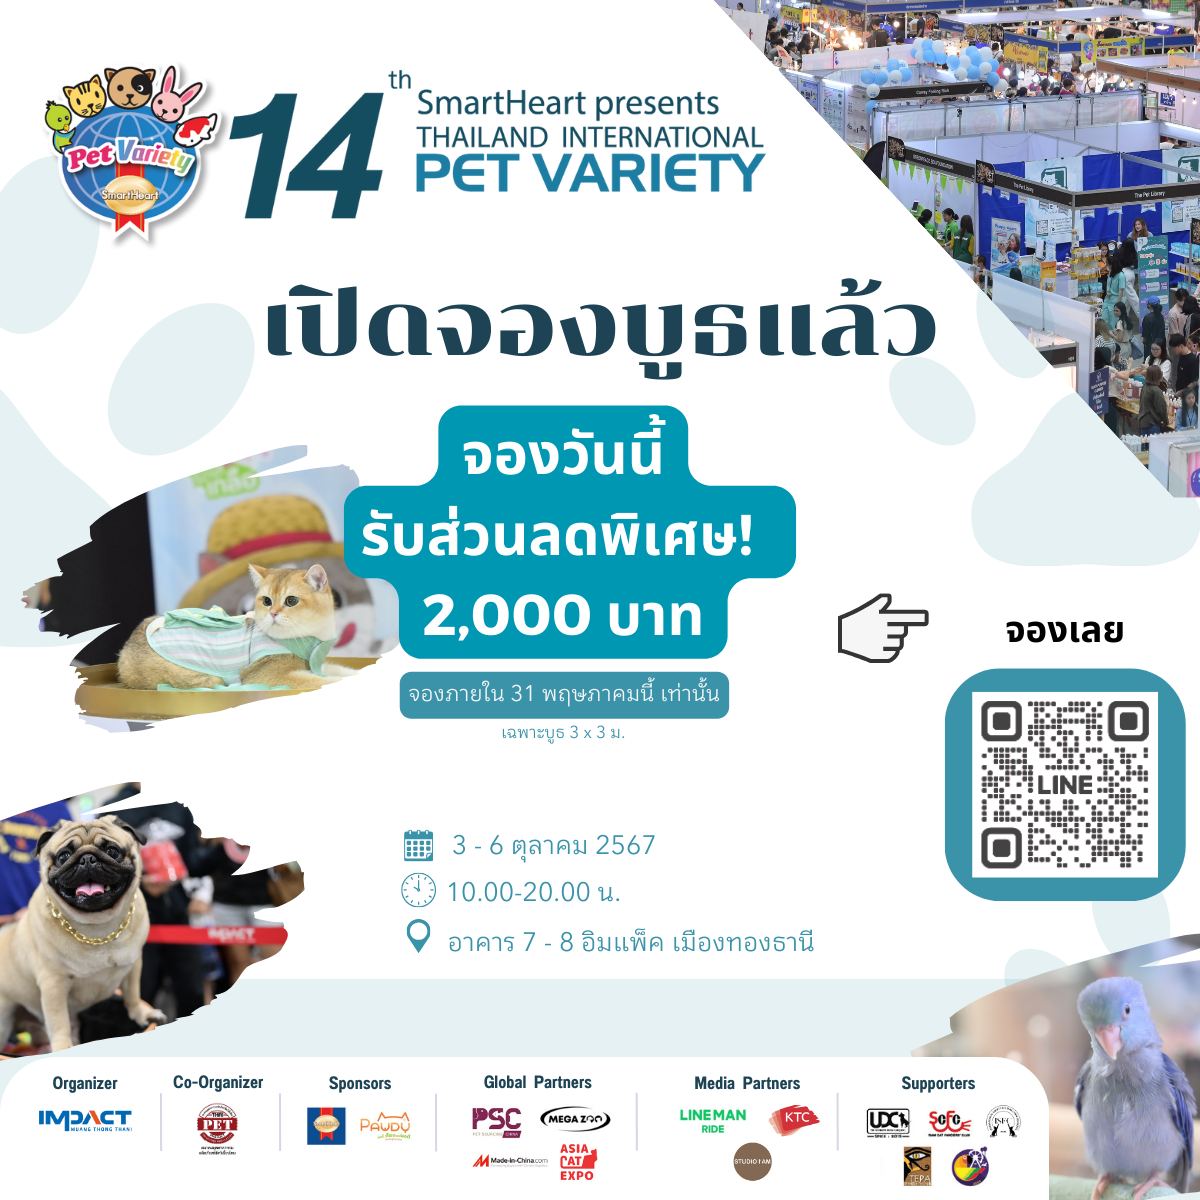 SmartHeart presents Thailand International Pet Variety Exhibition ครั้งที่ 14